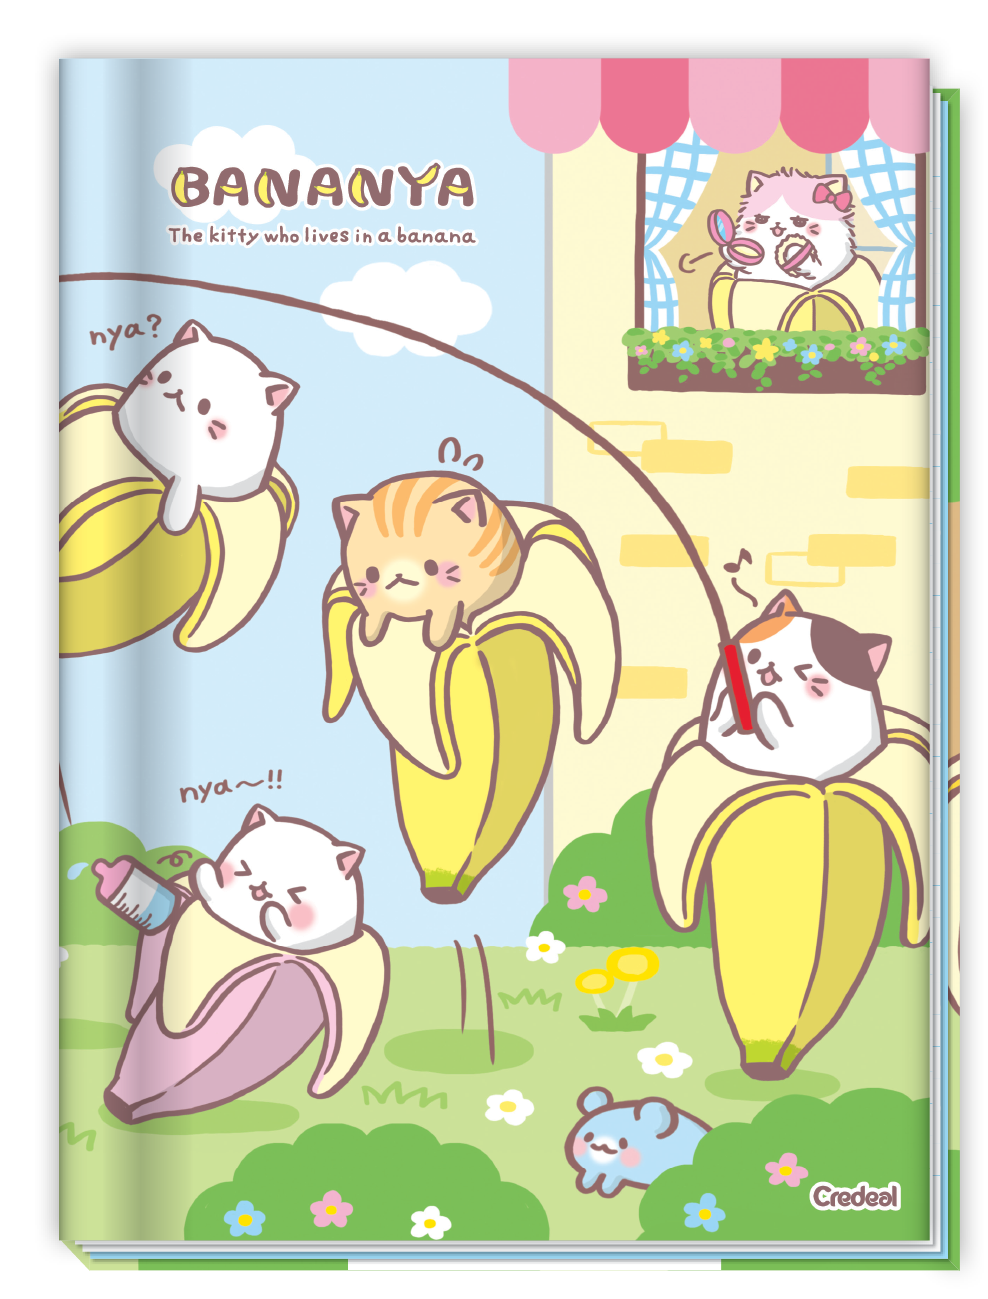 Bananya - Cadero Costurado